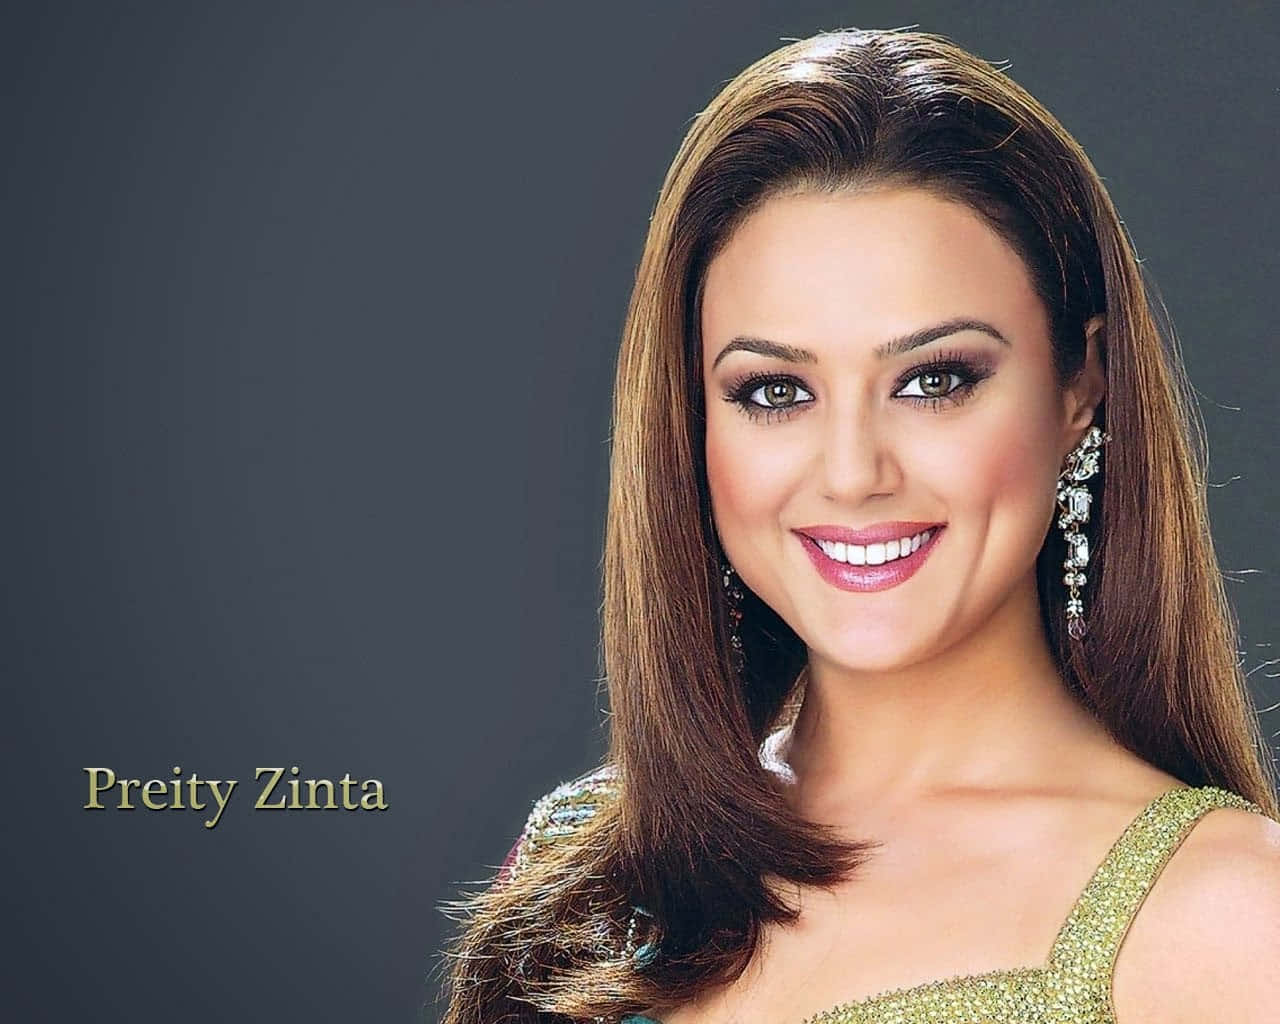 Preity Zinta Gray Background Nice Smile Wallpaper